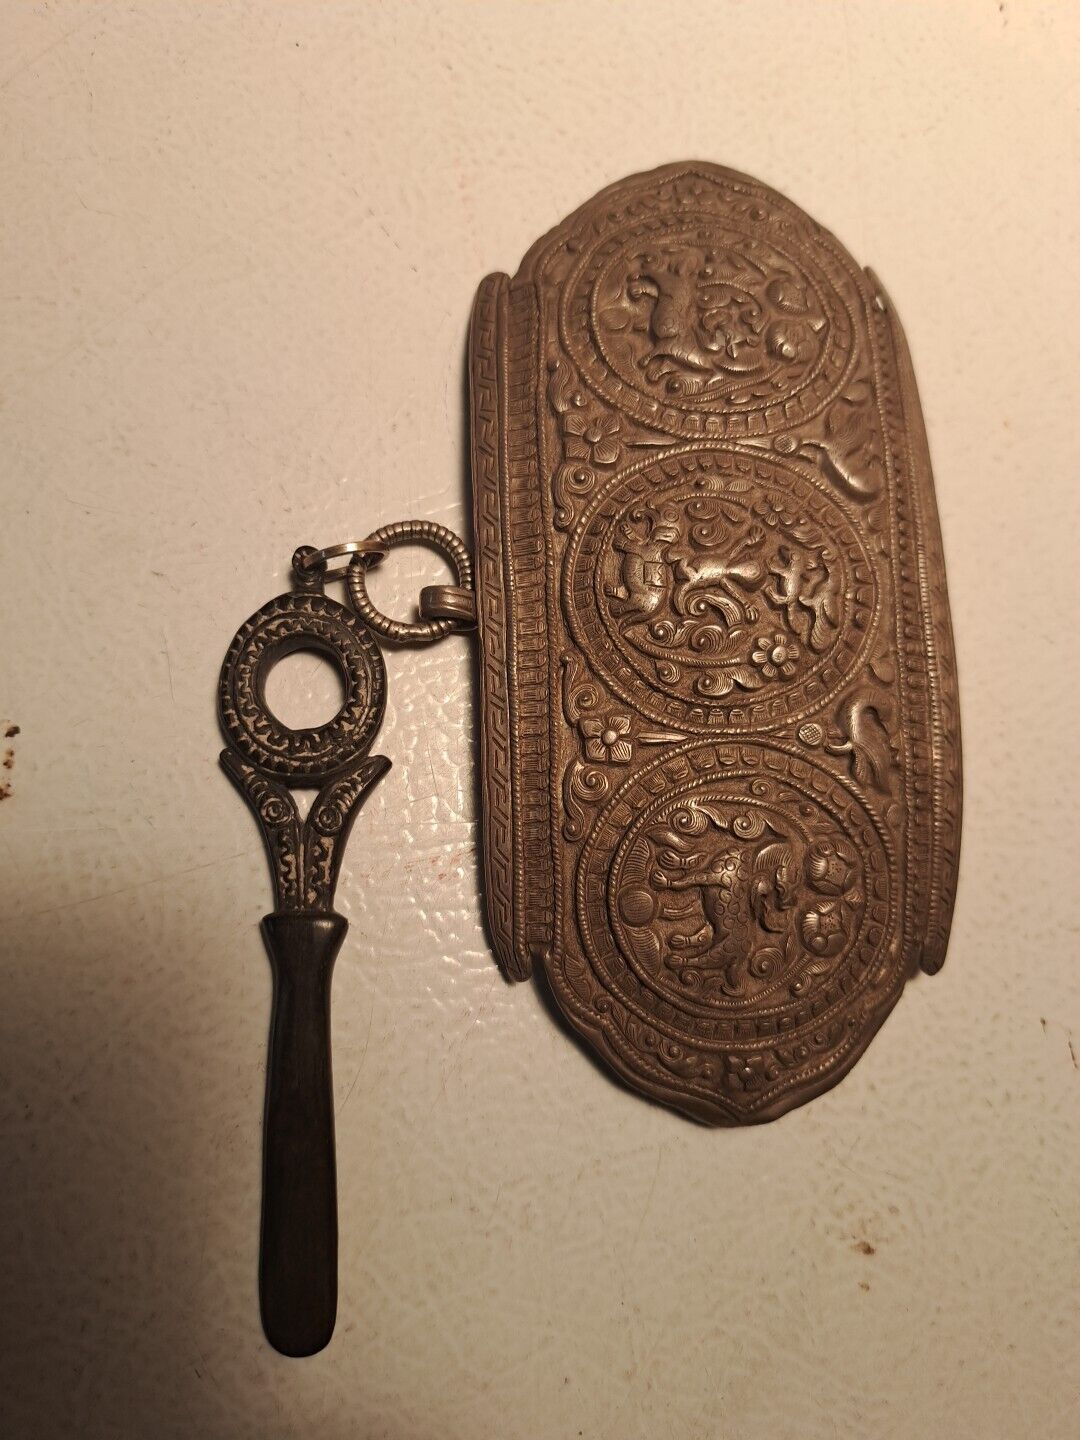 Tibetan Silver Hammered Belt Buckle 1800's?